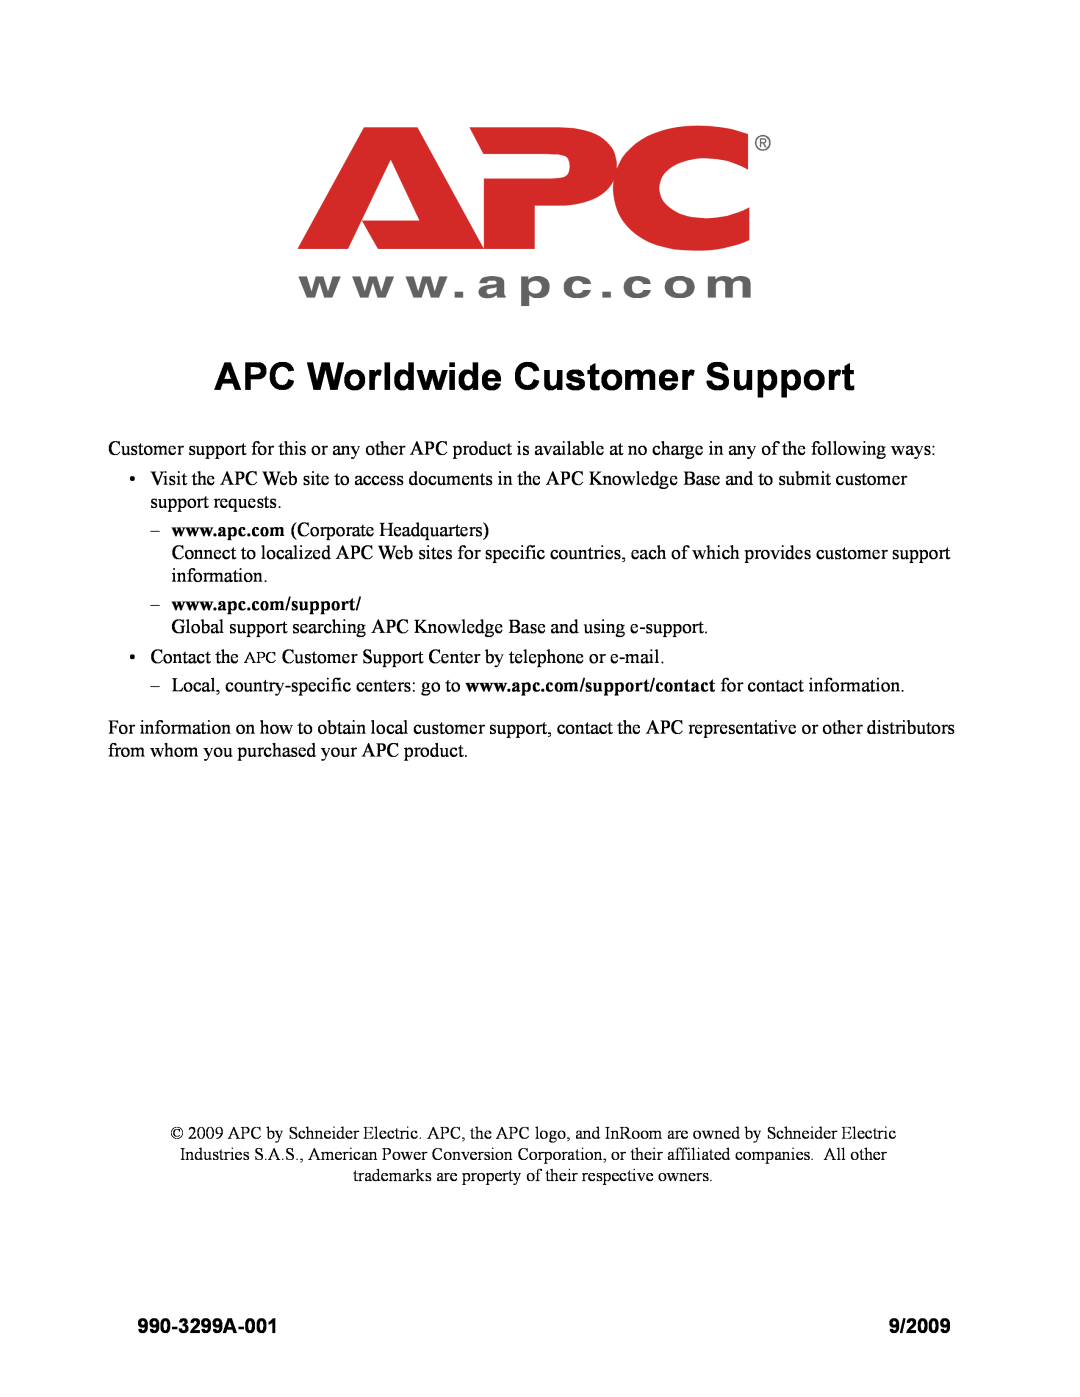 APC ACPDX21-86, ACPCW40-150 manual APC Worldwide Customer Support, 990-3299A-001, 9/2009 